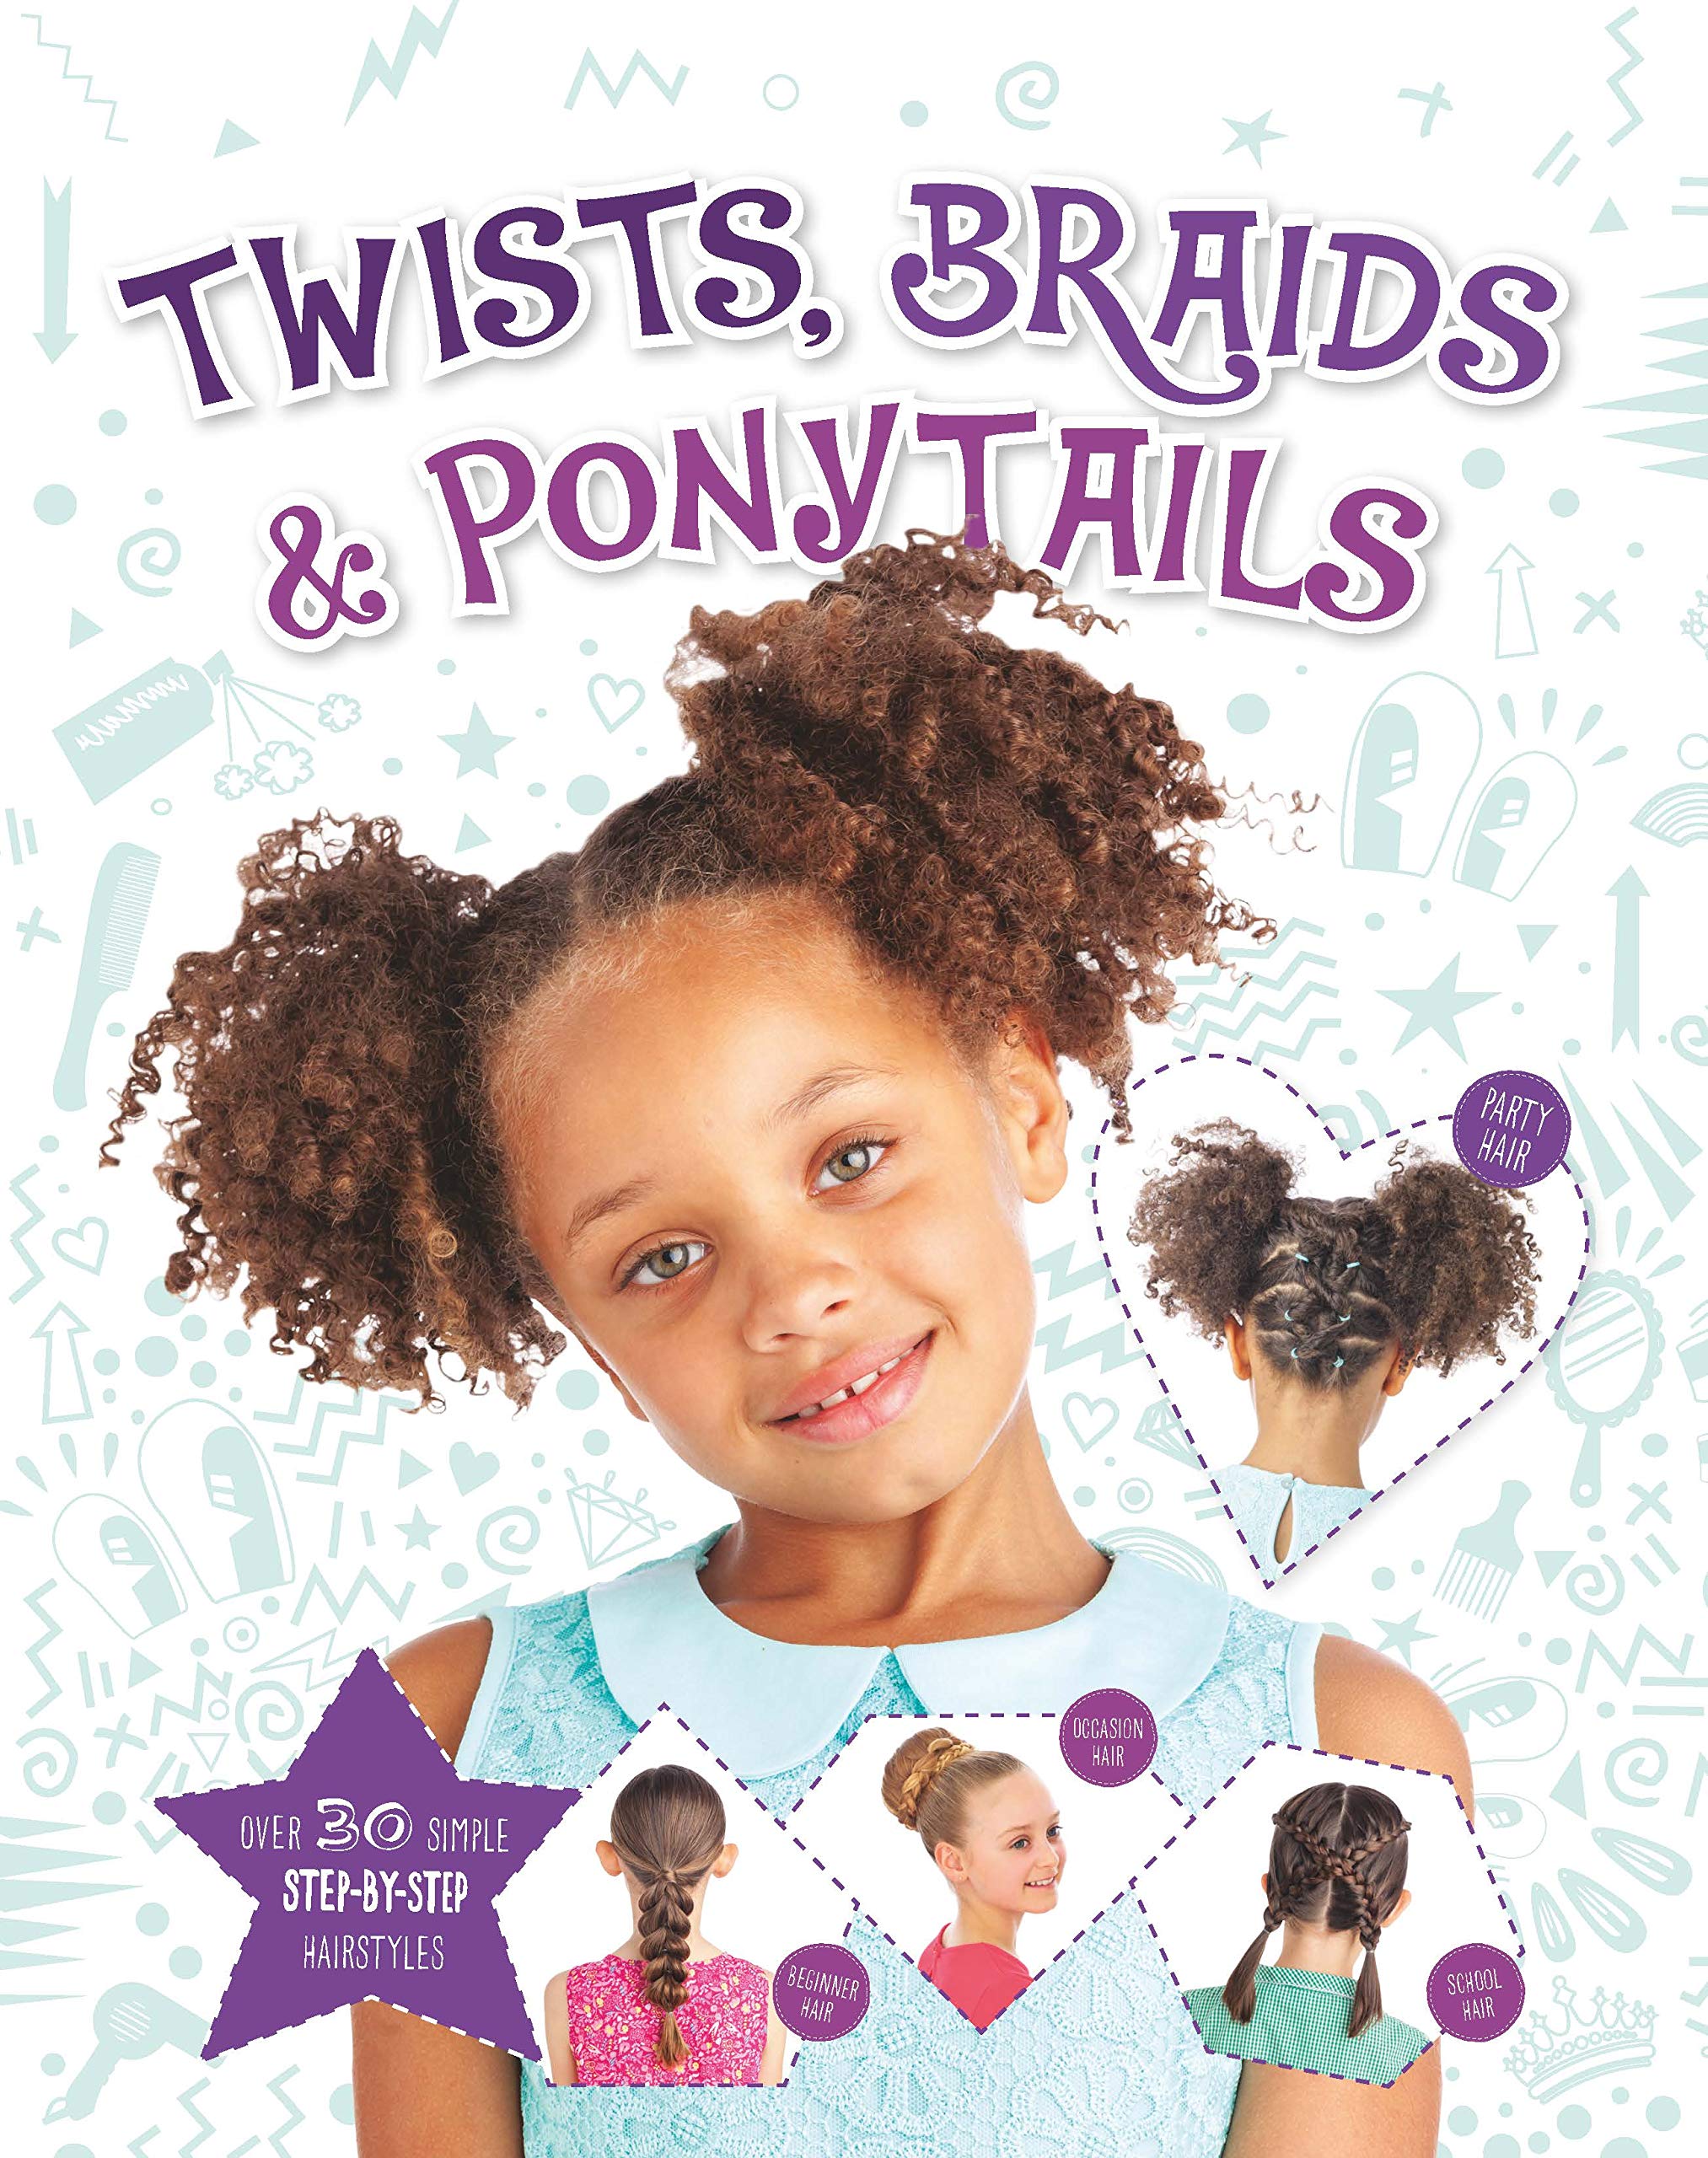 Twists, Braids and Ponytails